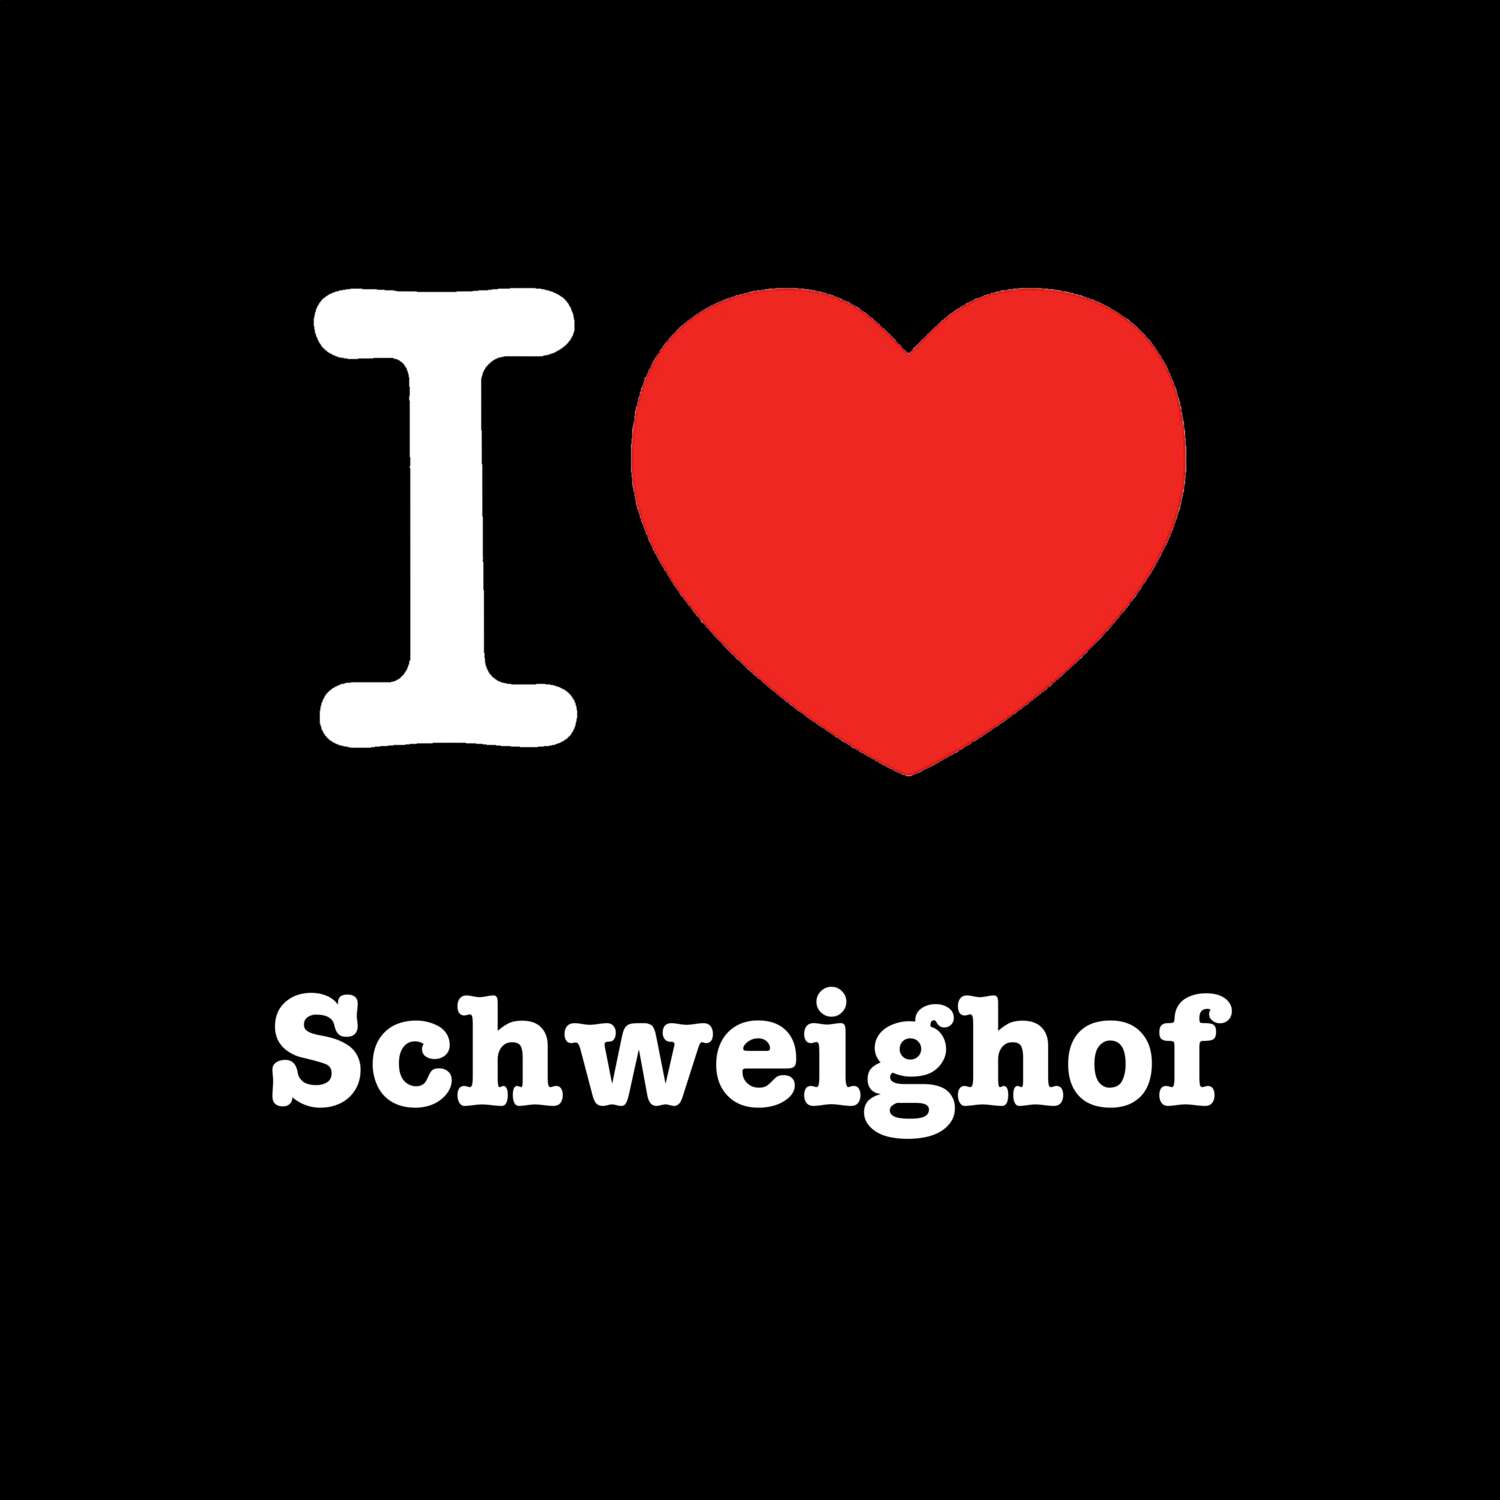 Schweighof T-Shirt »I love«